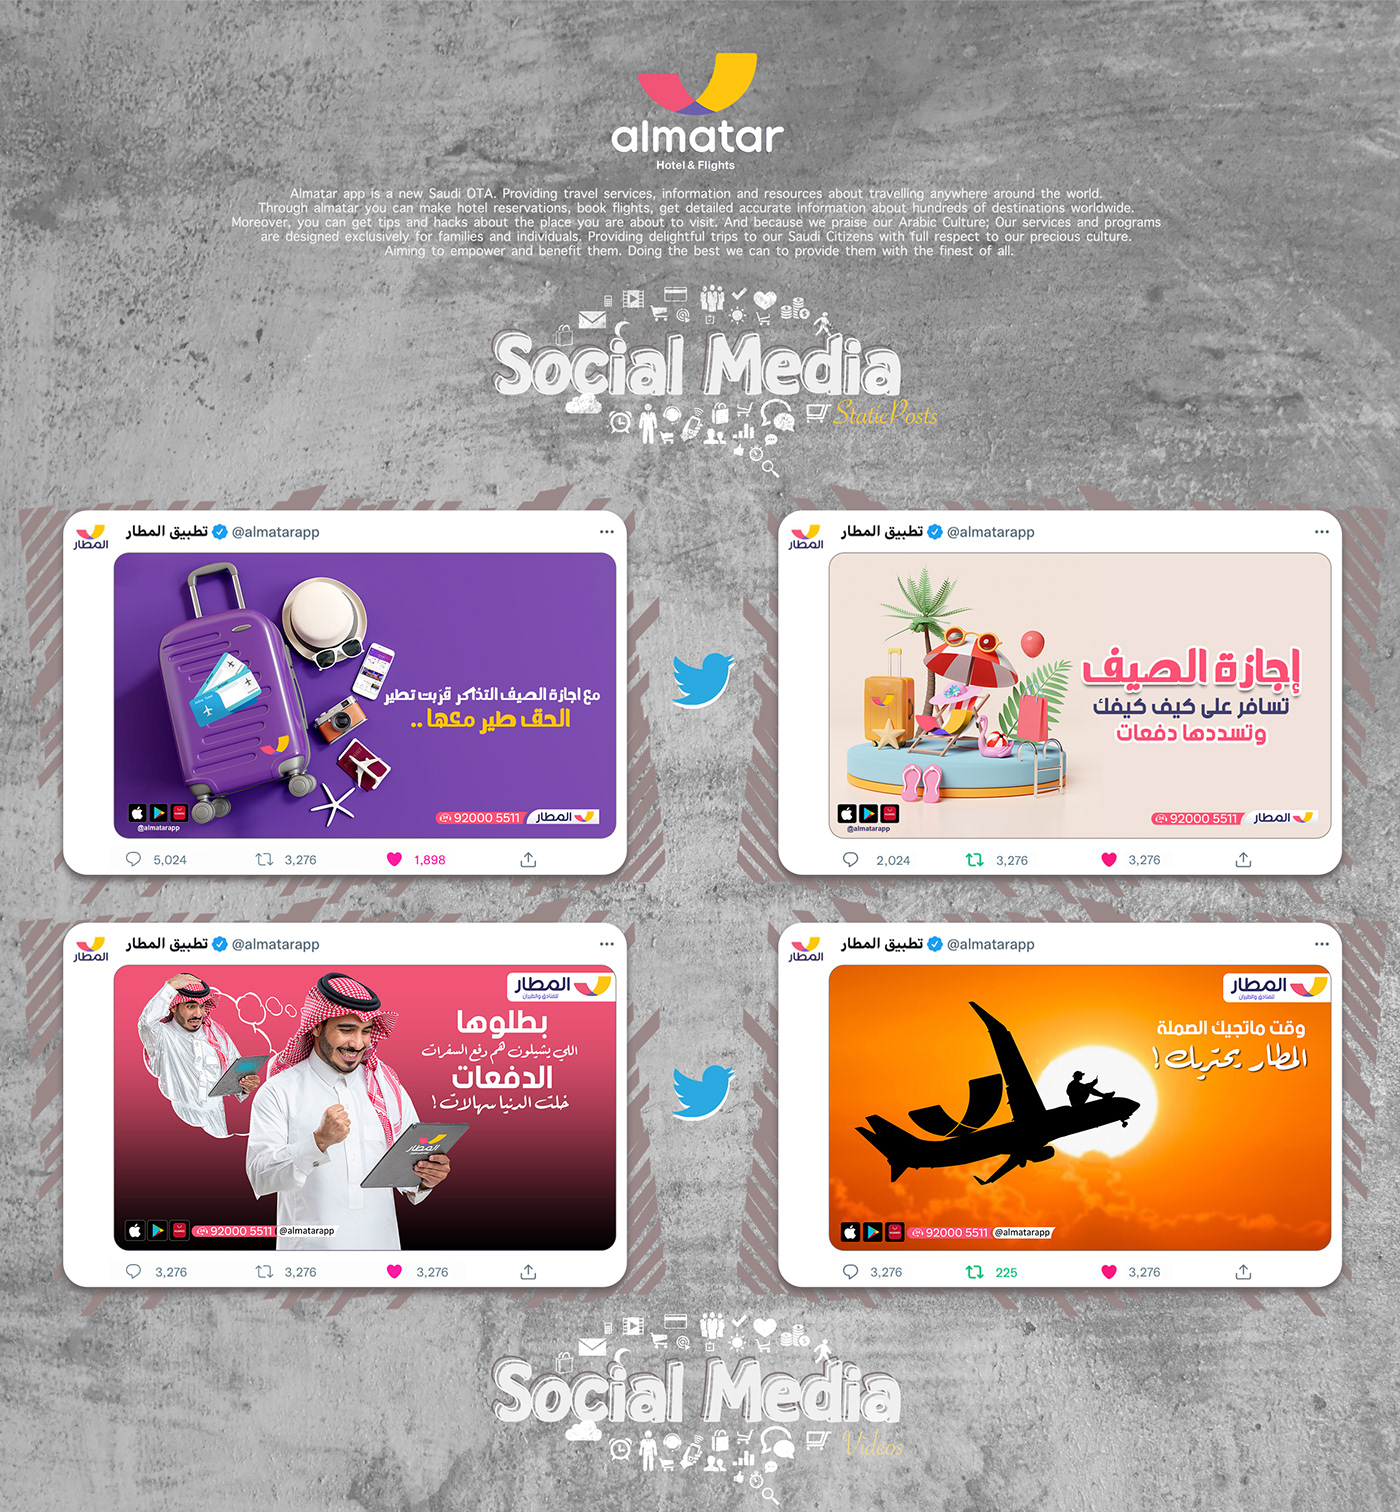 alhilal almatar app flight hotels ittihad Saudi Arabia saudiday tourism Travel